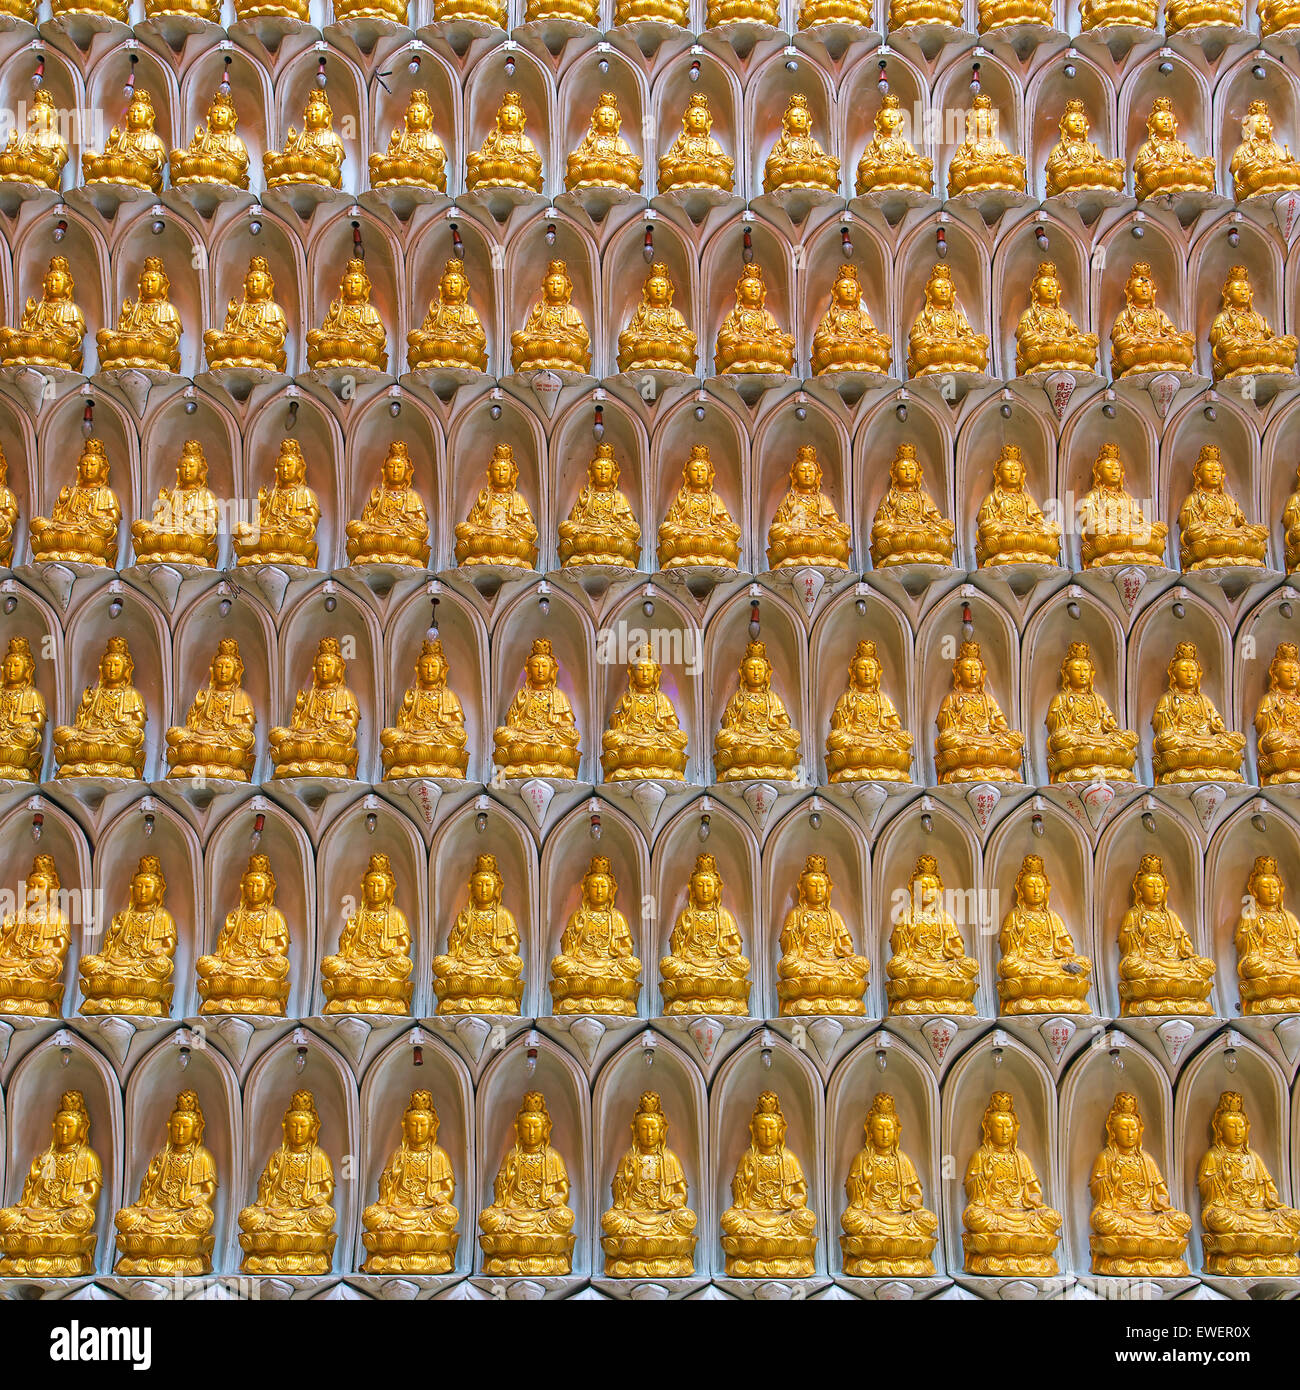 Golden buddha statue pattern background Stock Photo